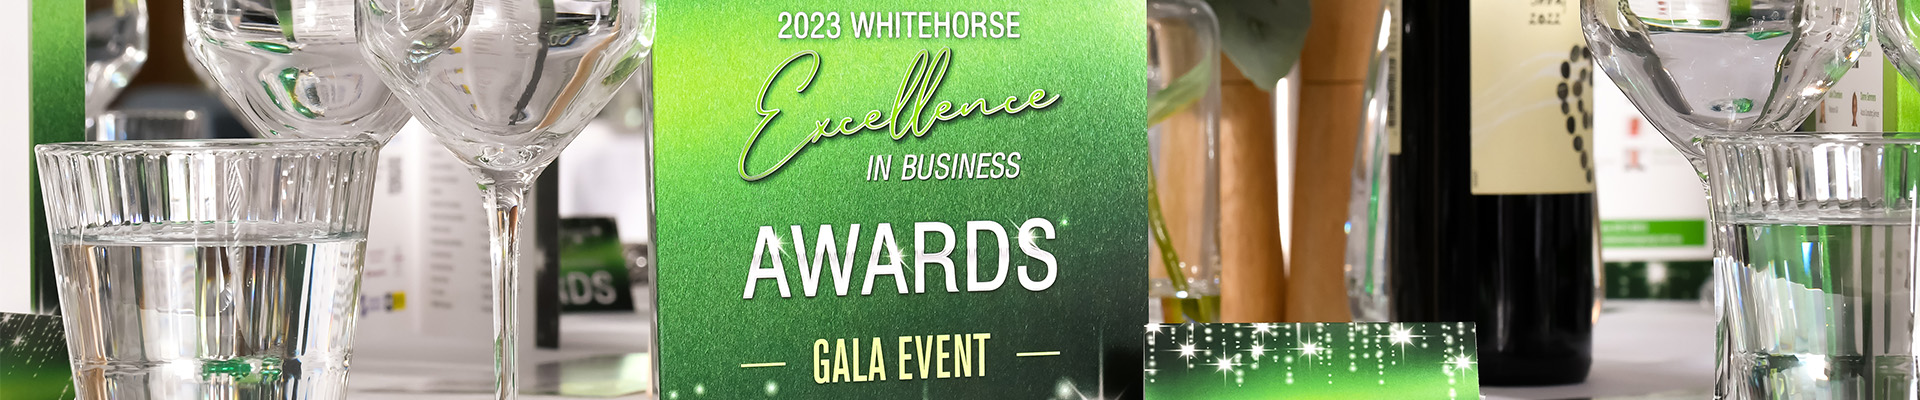 2023 Whitehorse Business Awards Nominees